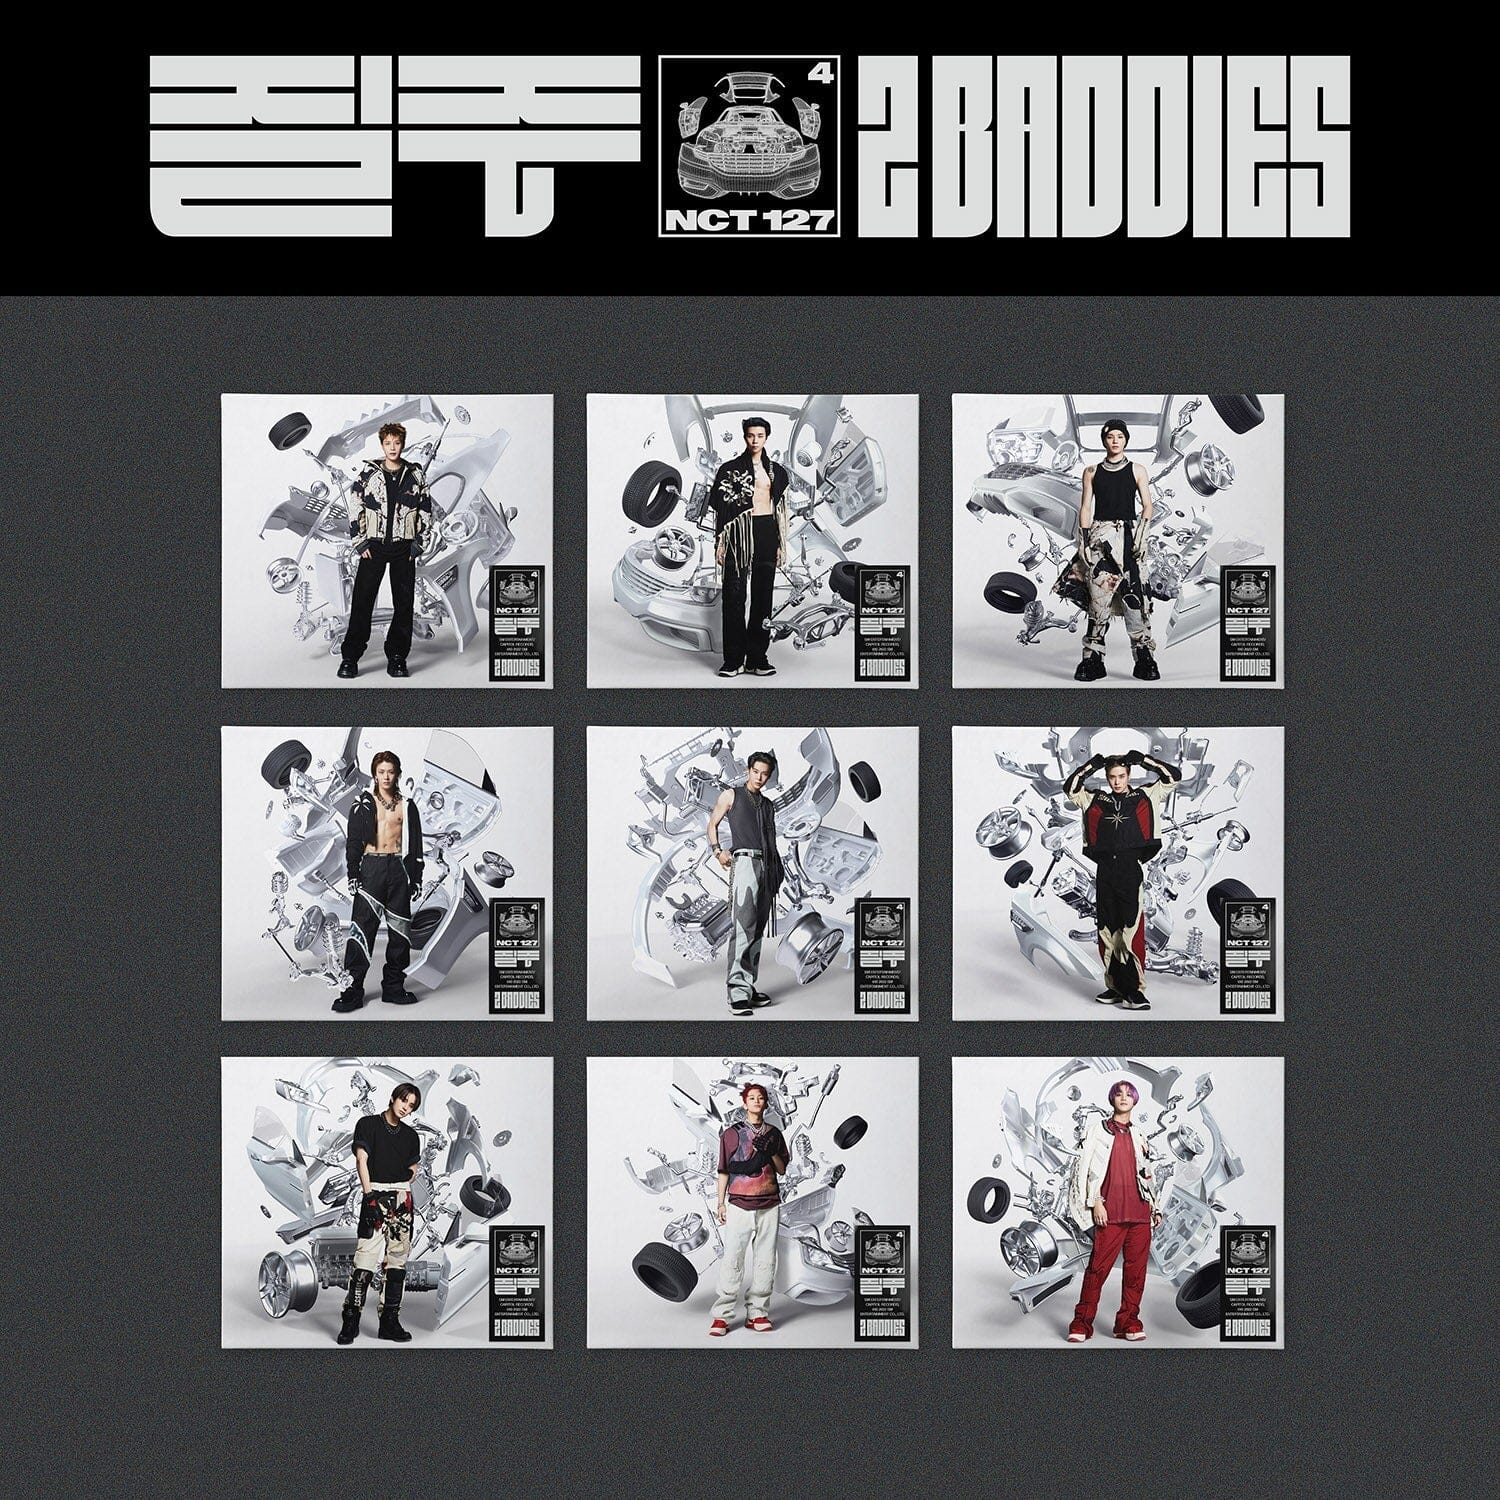 The 4th Album '2 Baddies' (Digipack Ver.) - Random